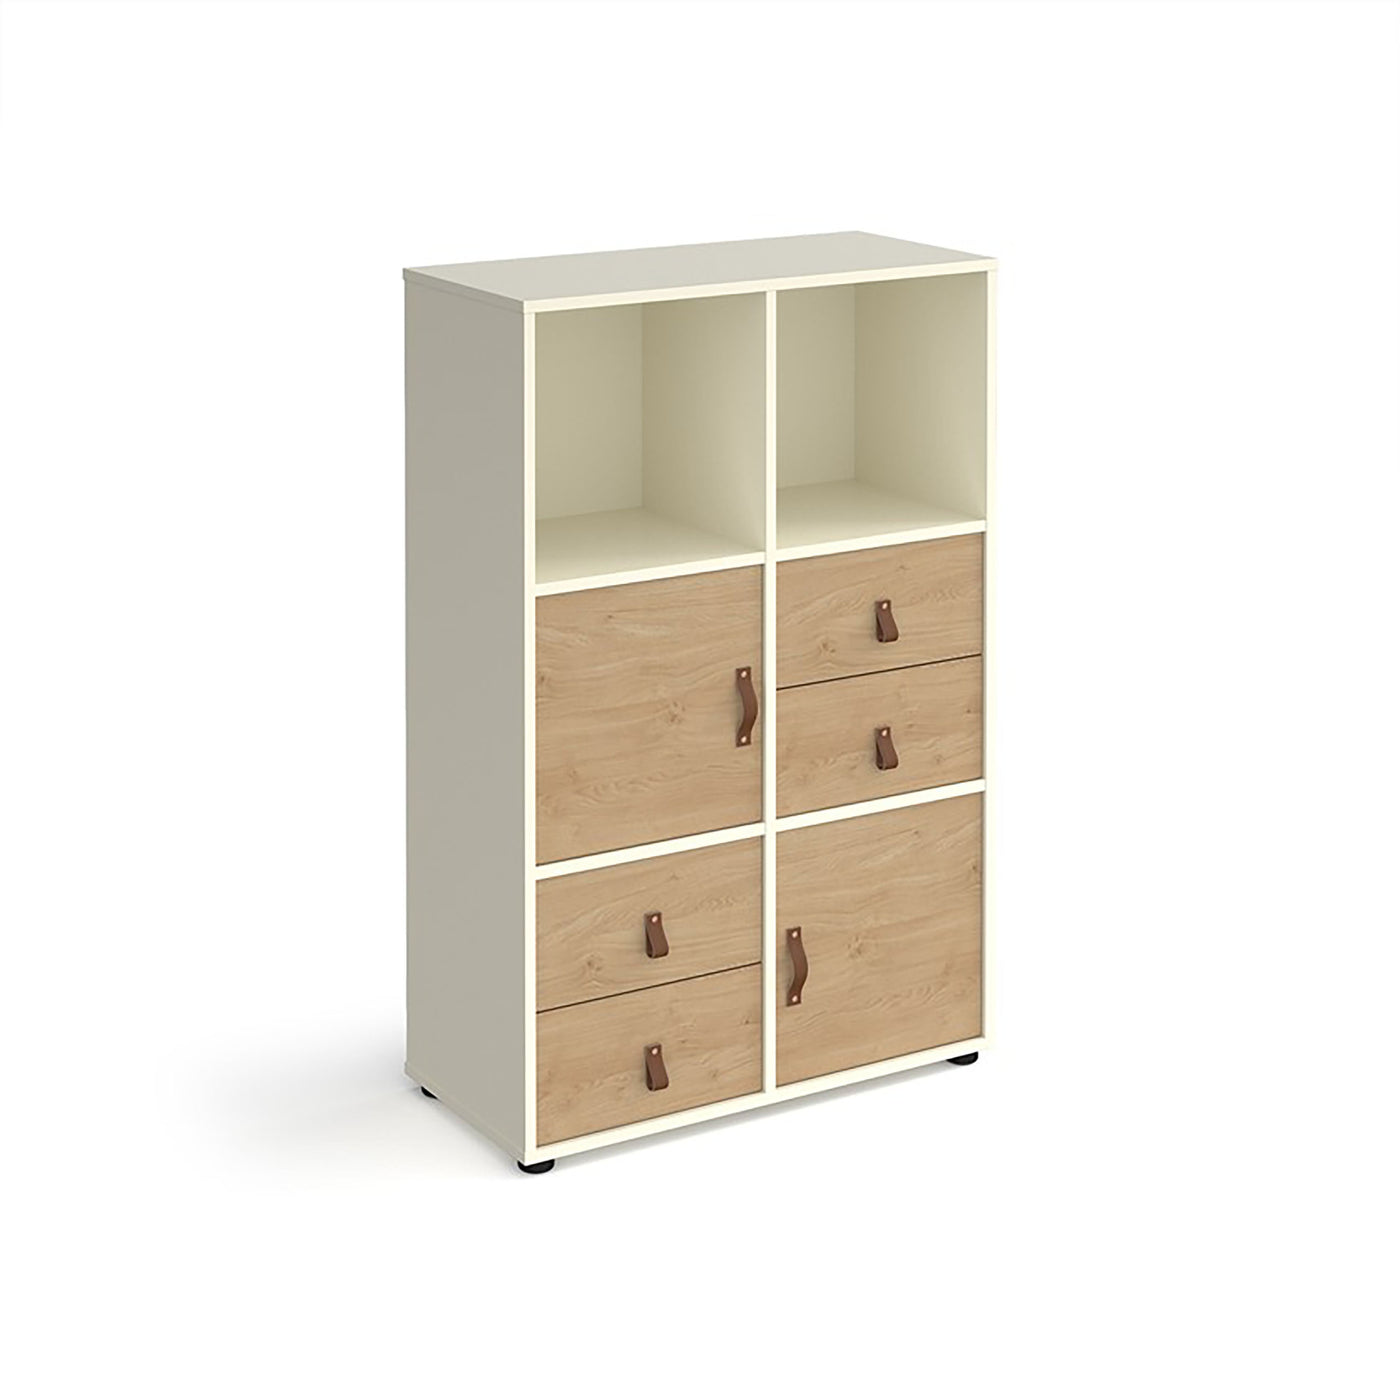 Cube Storage Unit Bundle | Home Office Storage | Wooden Storage | Home Office Furniture